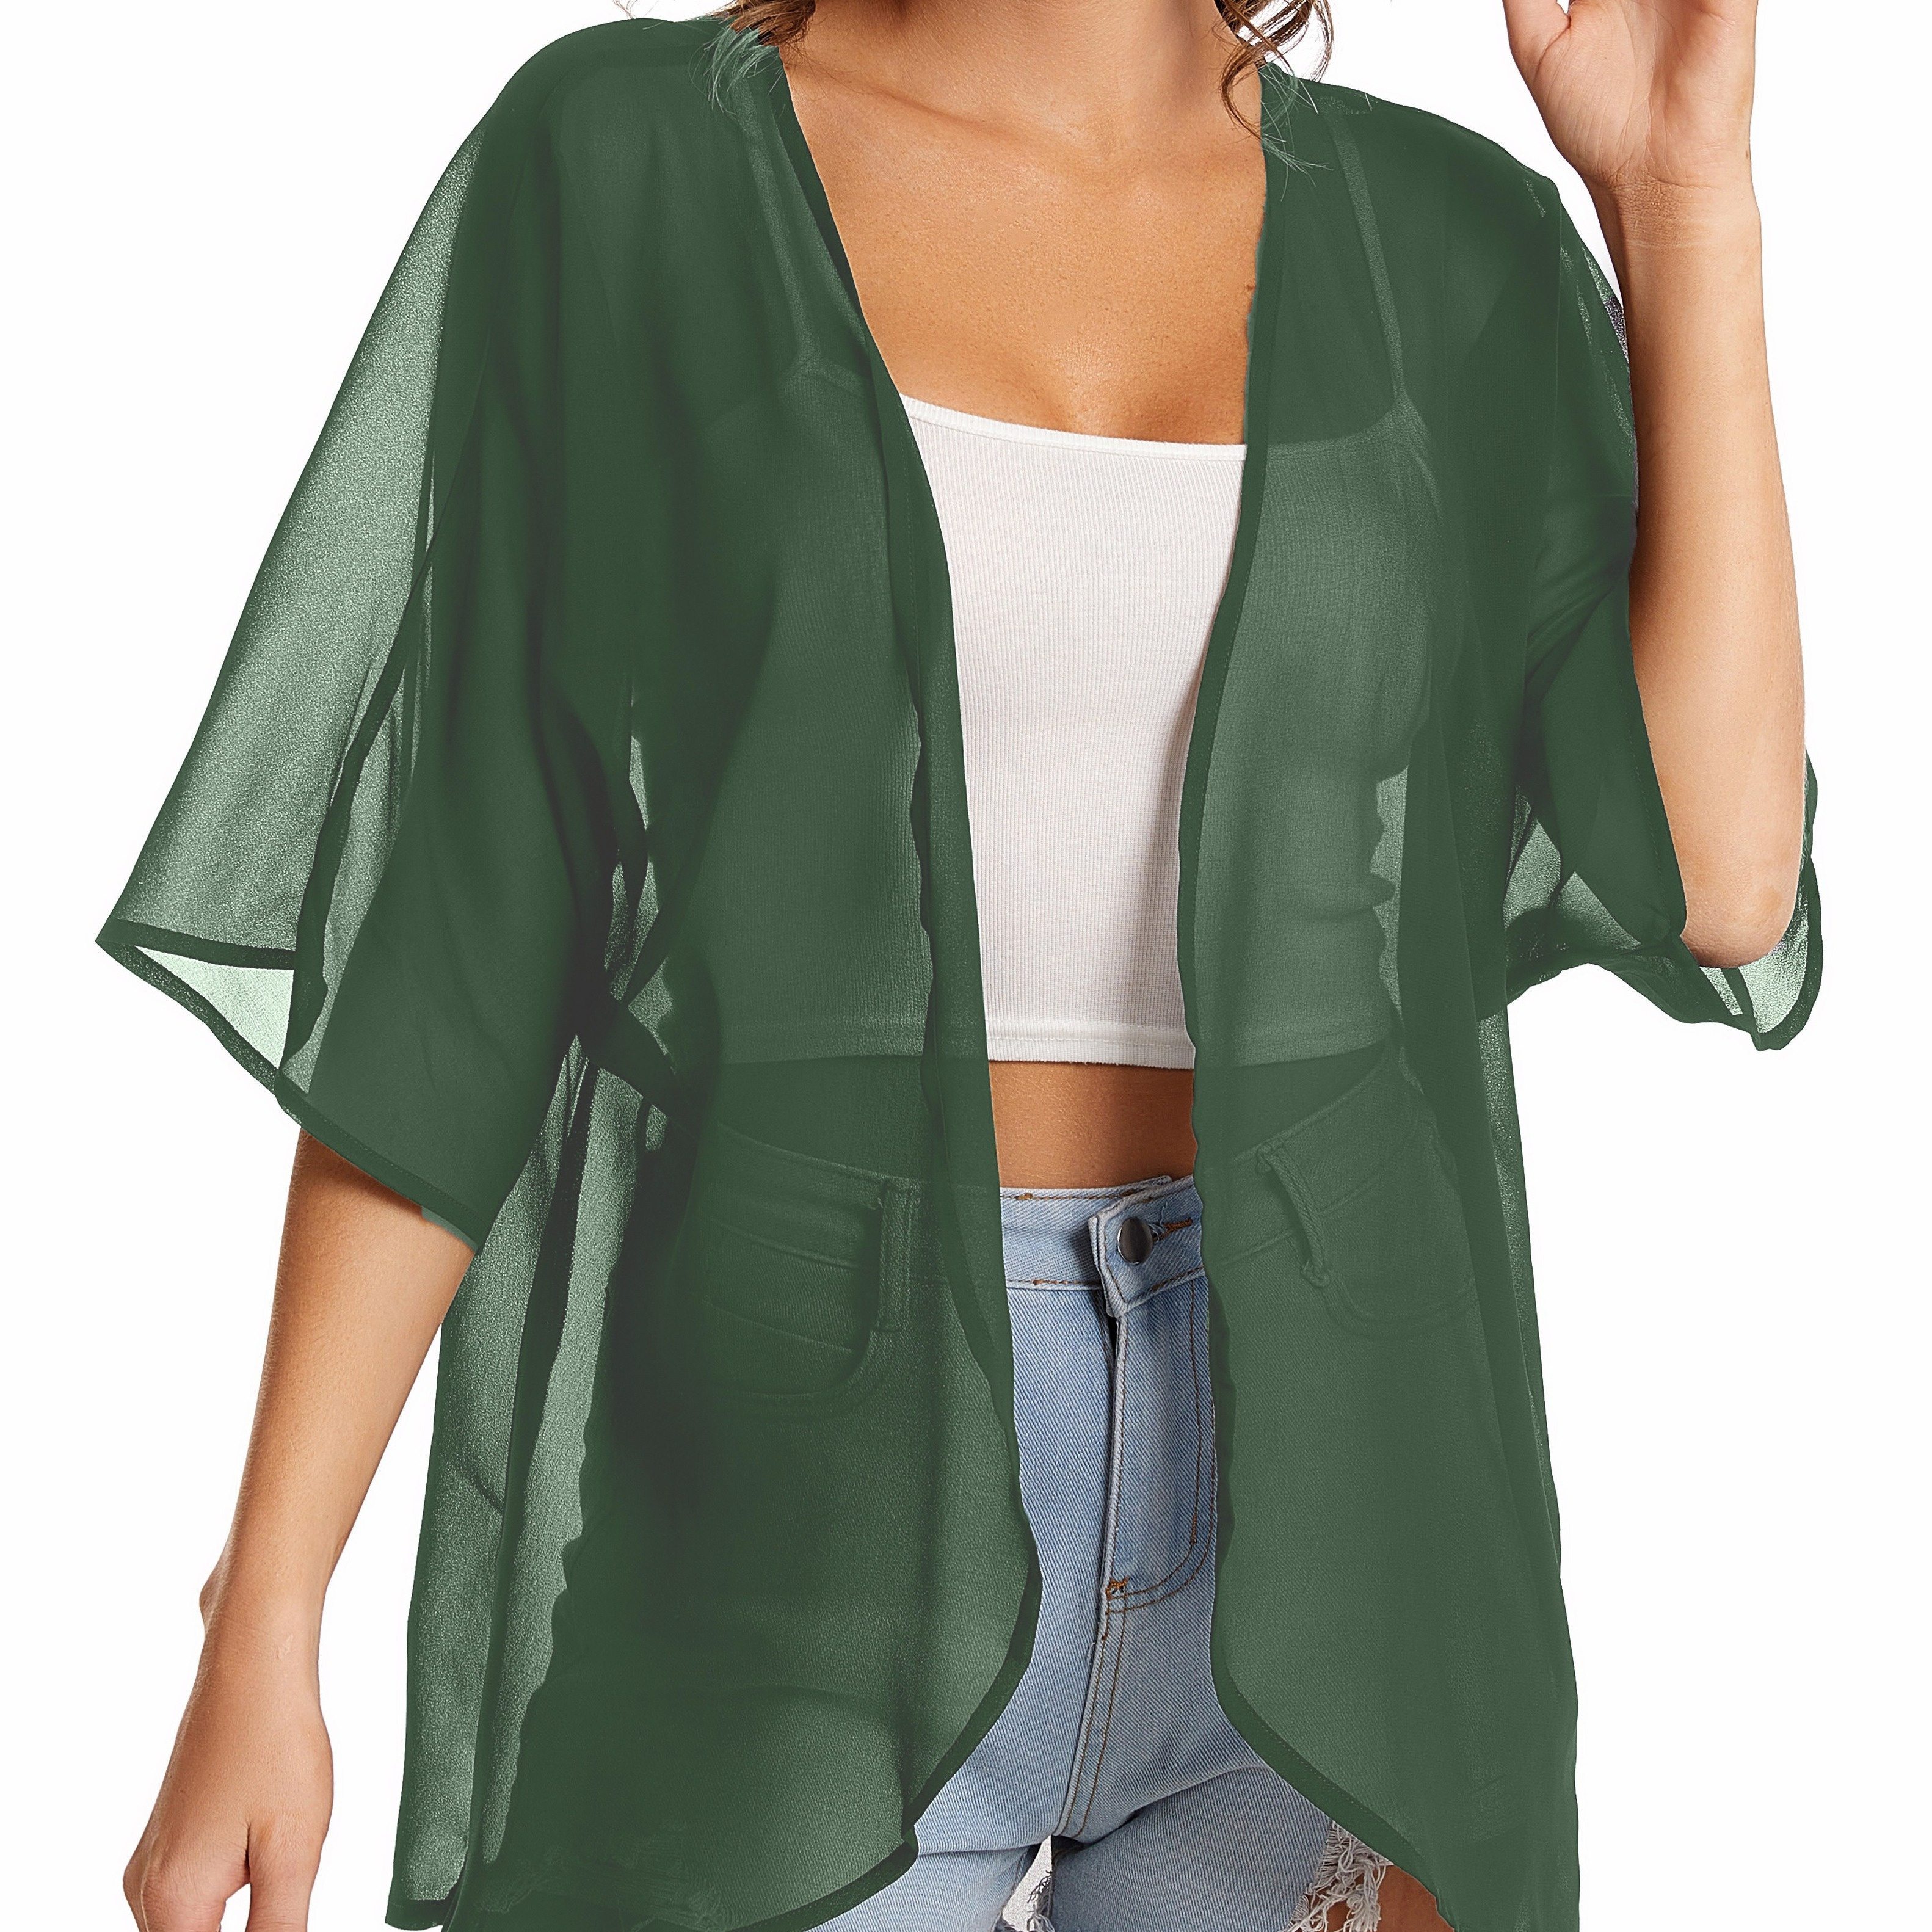 

Solid Color Half Sleeve Sheer Kimono For Beach, Chiffon Loose Elegant Cardigan Cover Up, Women's Swimwear & Clothing